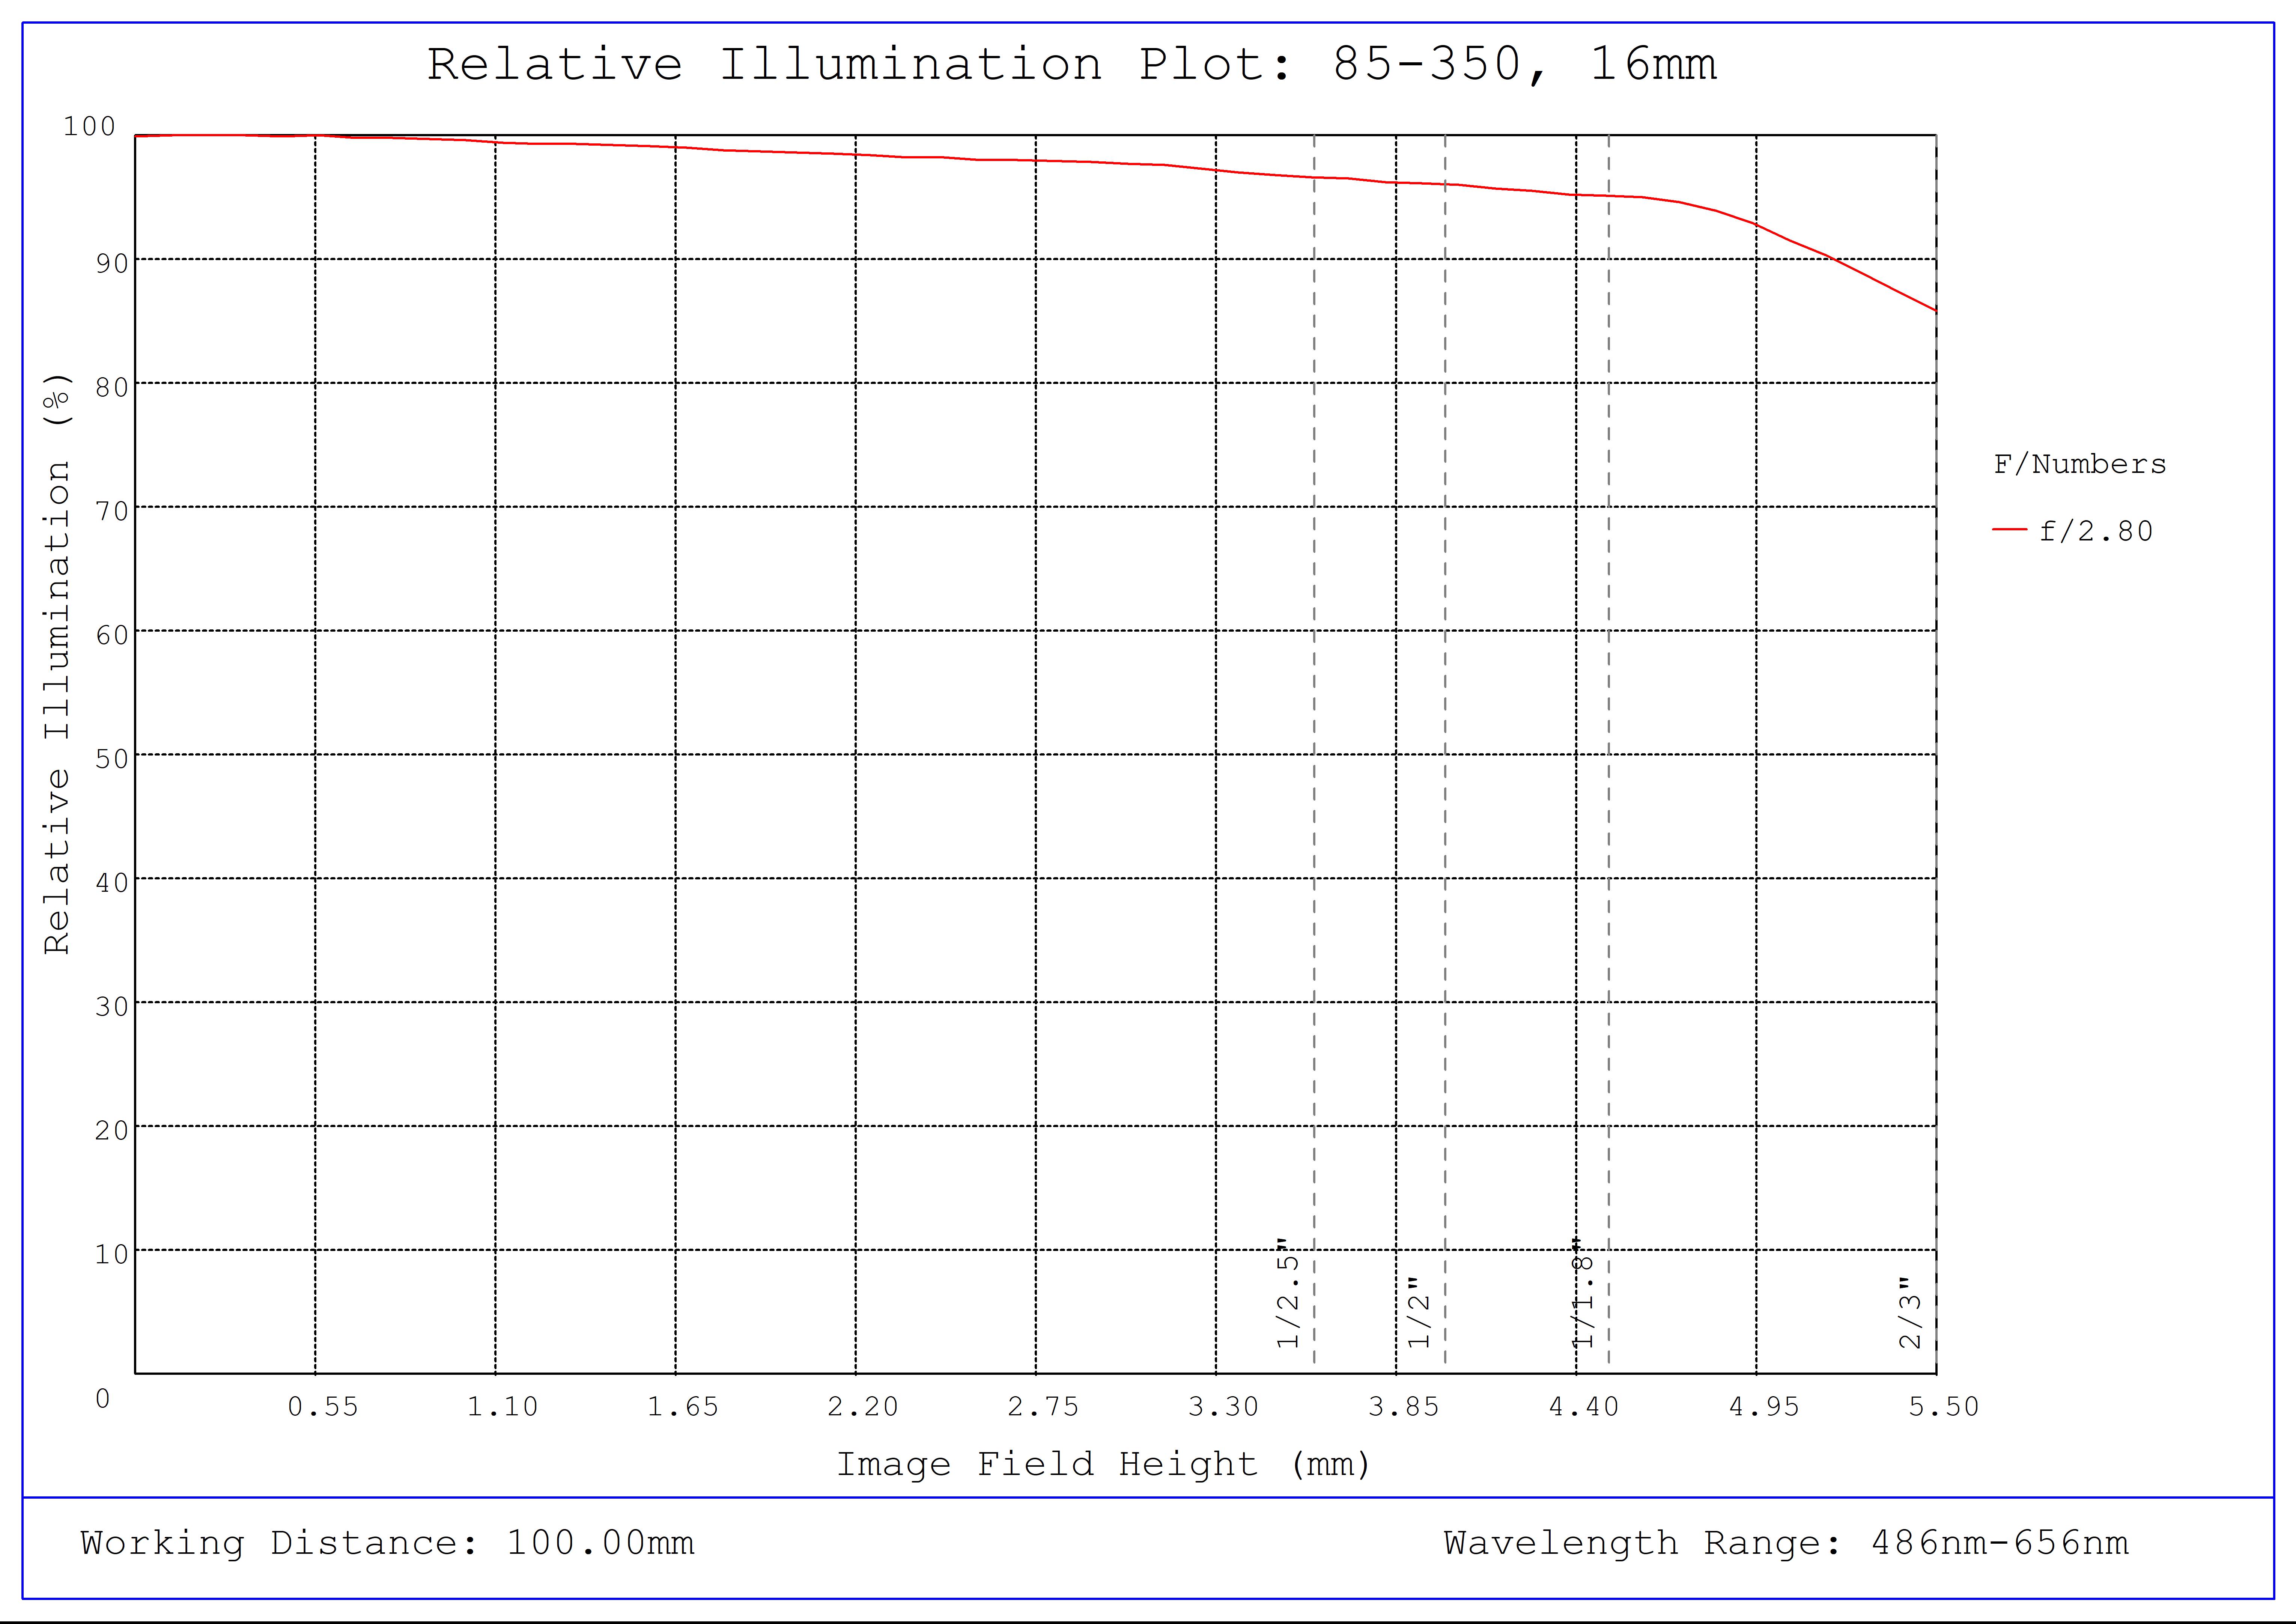 #85-350, 16mm, f/2.8 Ci Series Fixed Focal Length Lens, Relative Illumination Plot